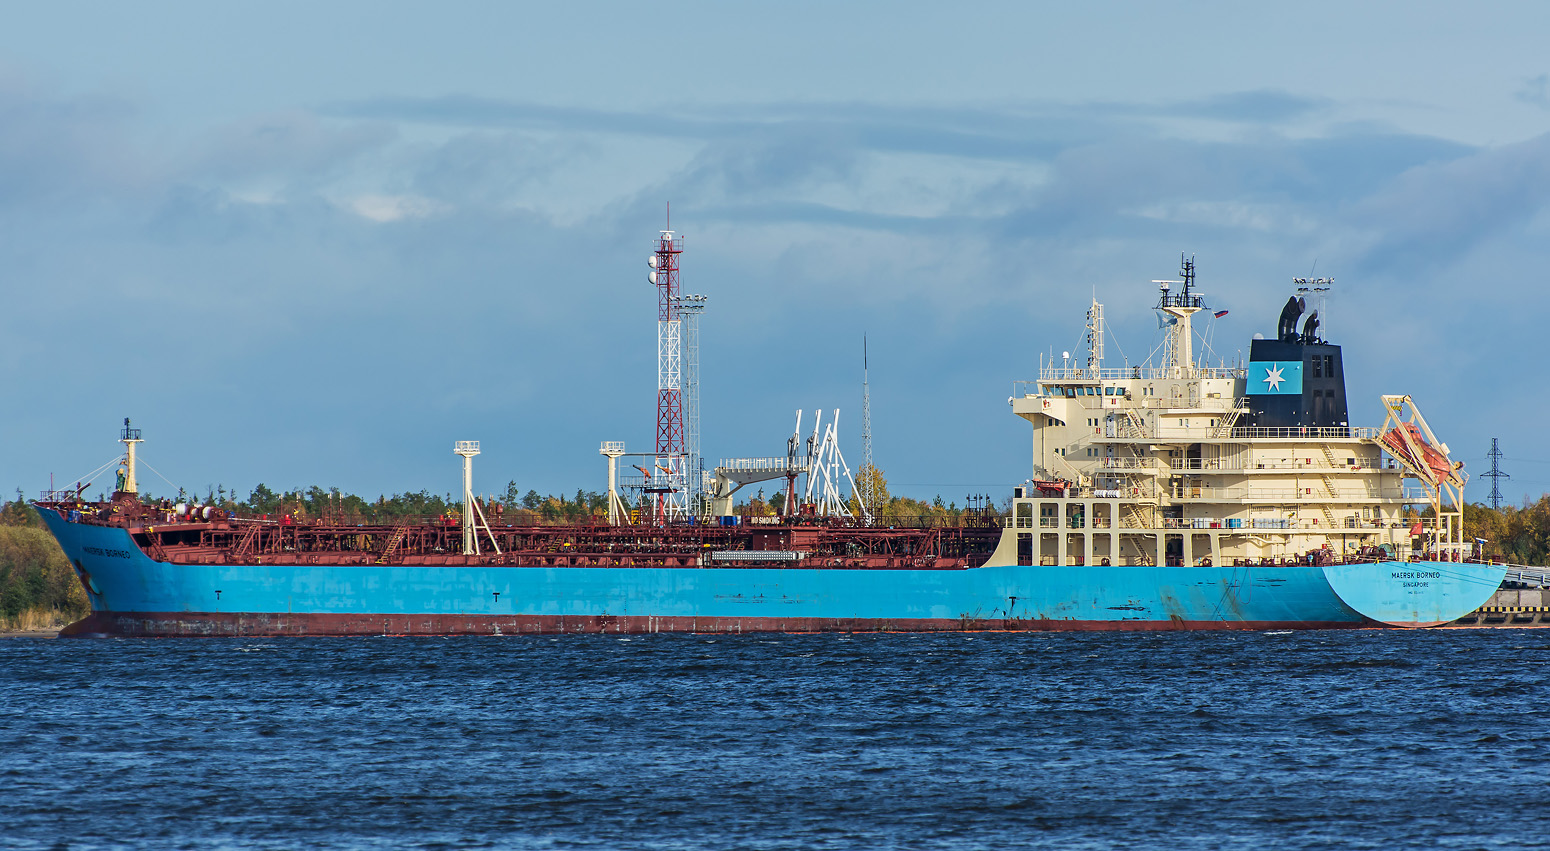 Maersk Borneo